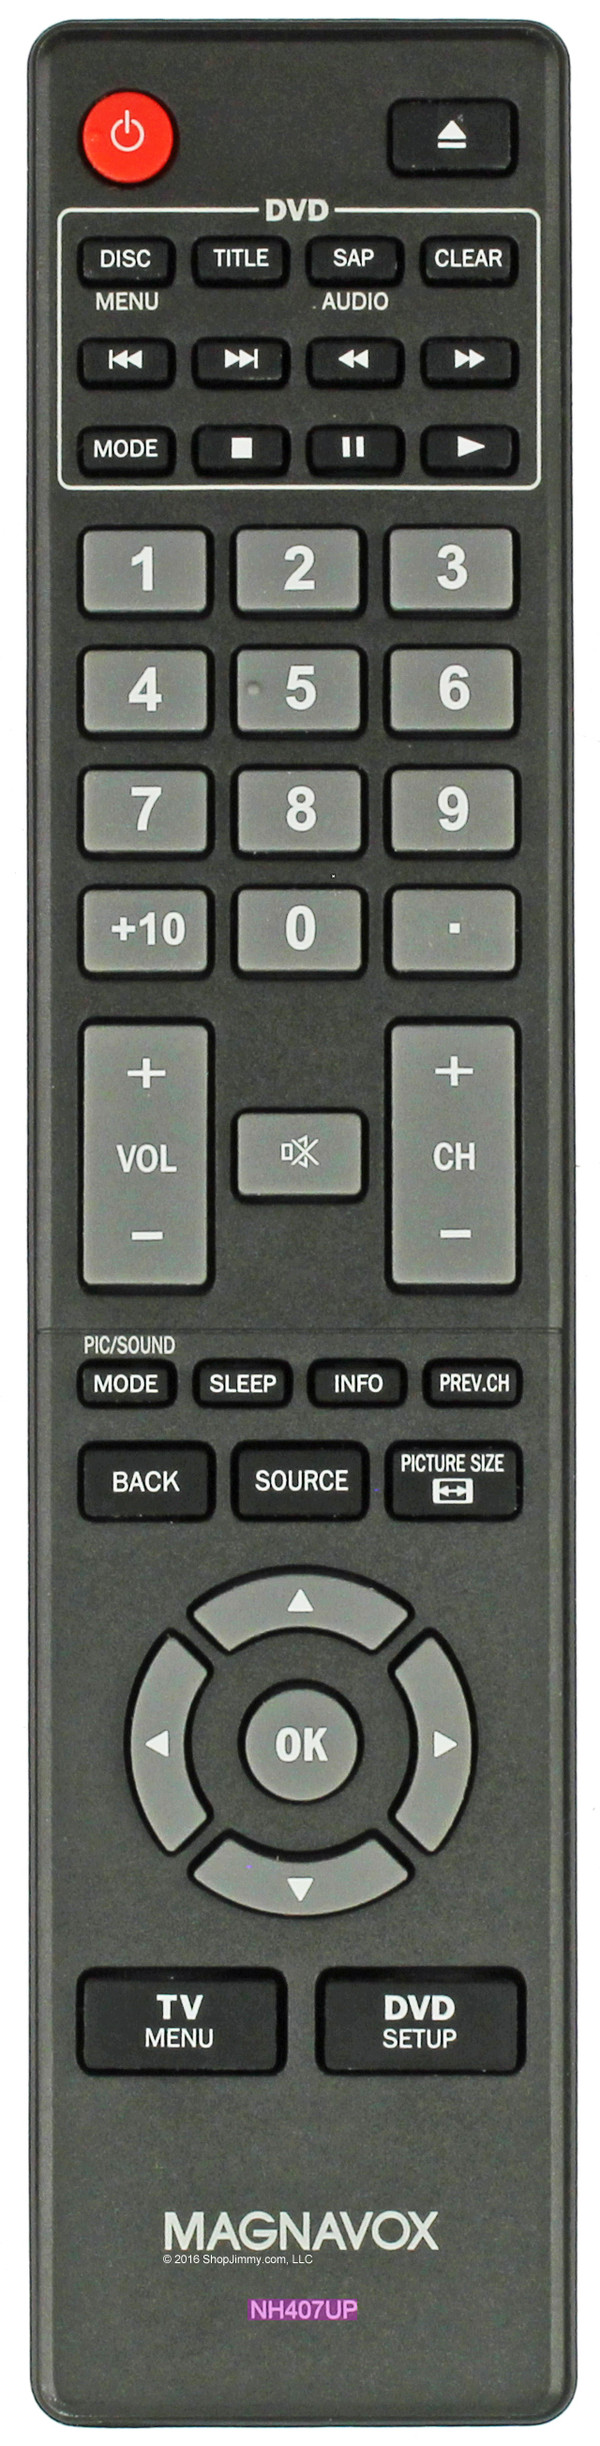 Magnavox NH407UP Remote Control-New